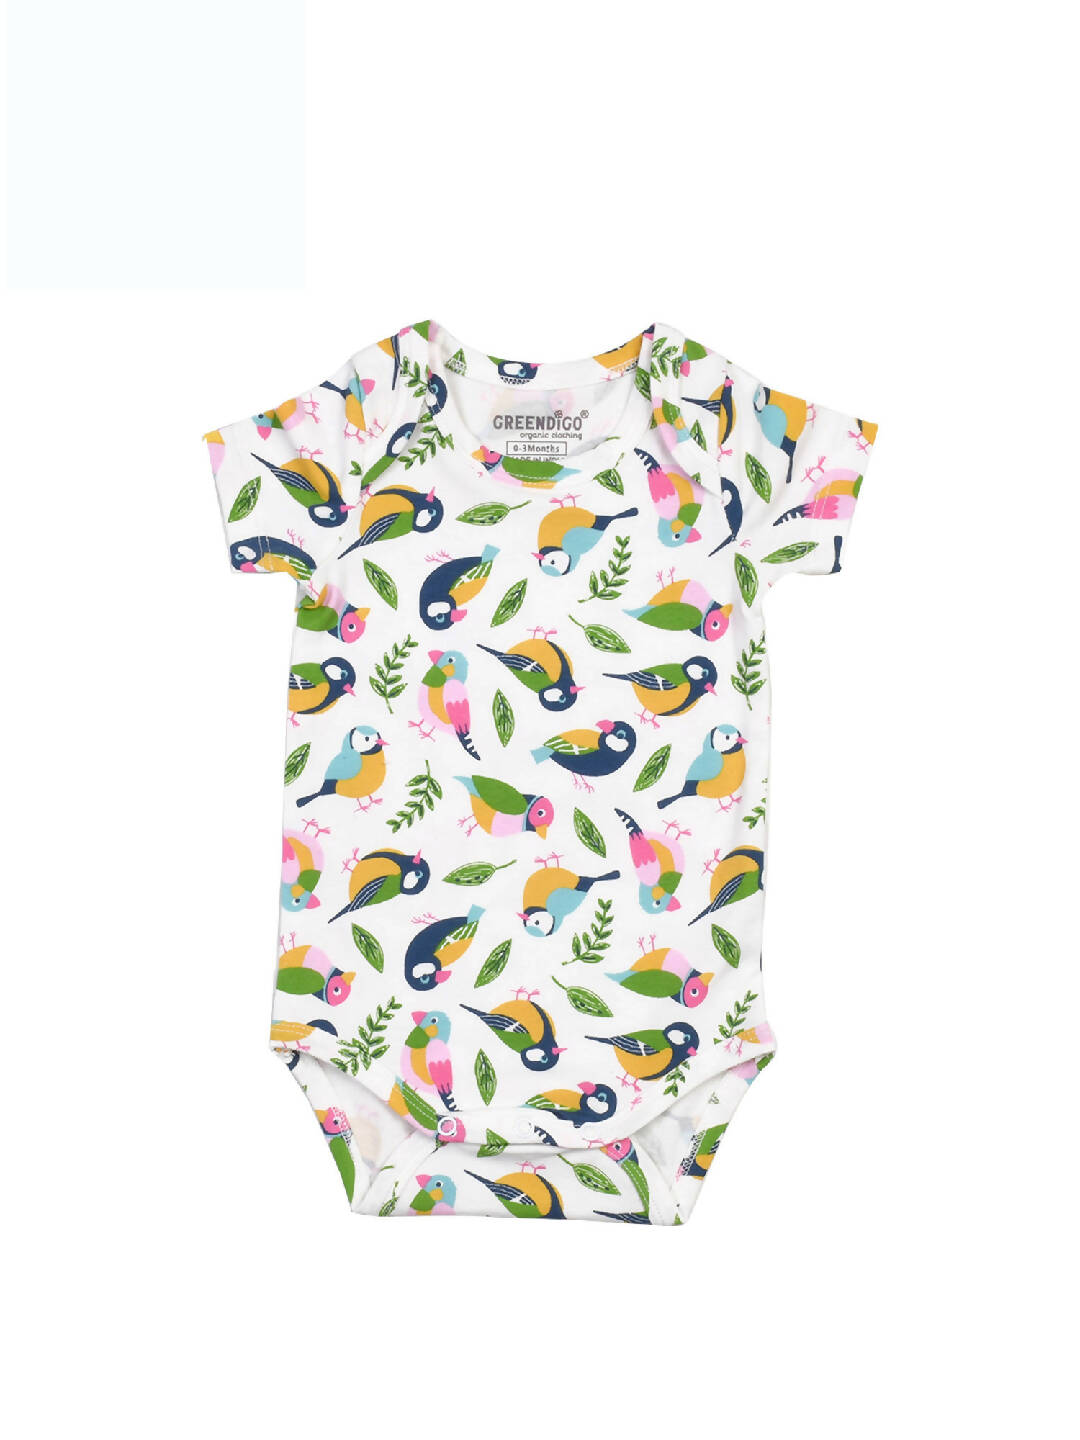 Greendigo Organic Cotton Infant bodysuit for new born baby boys and baby girls